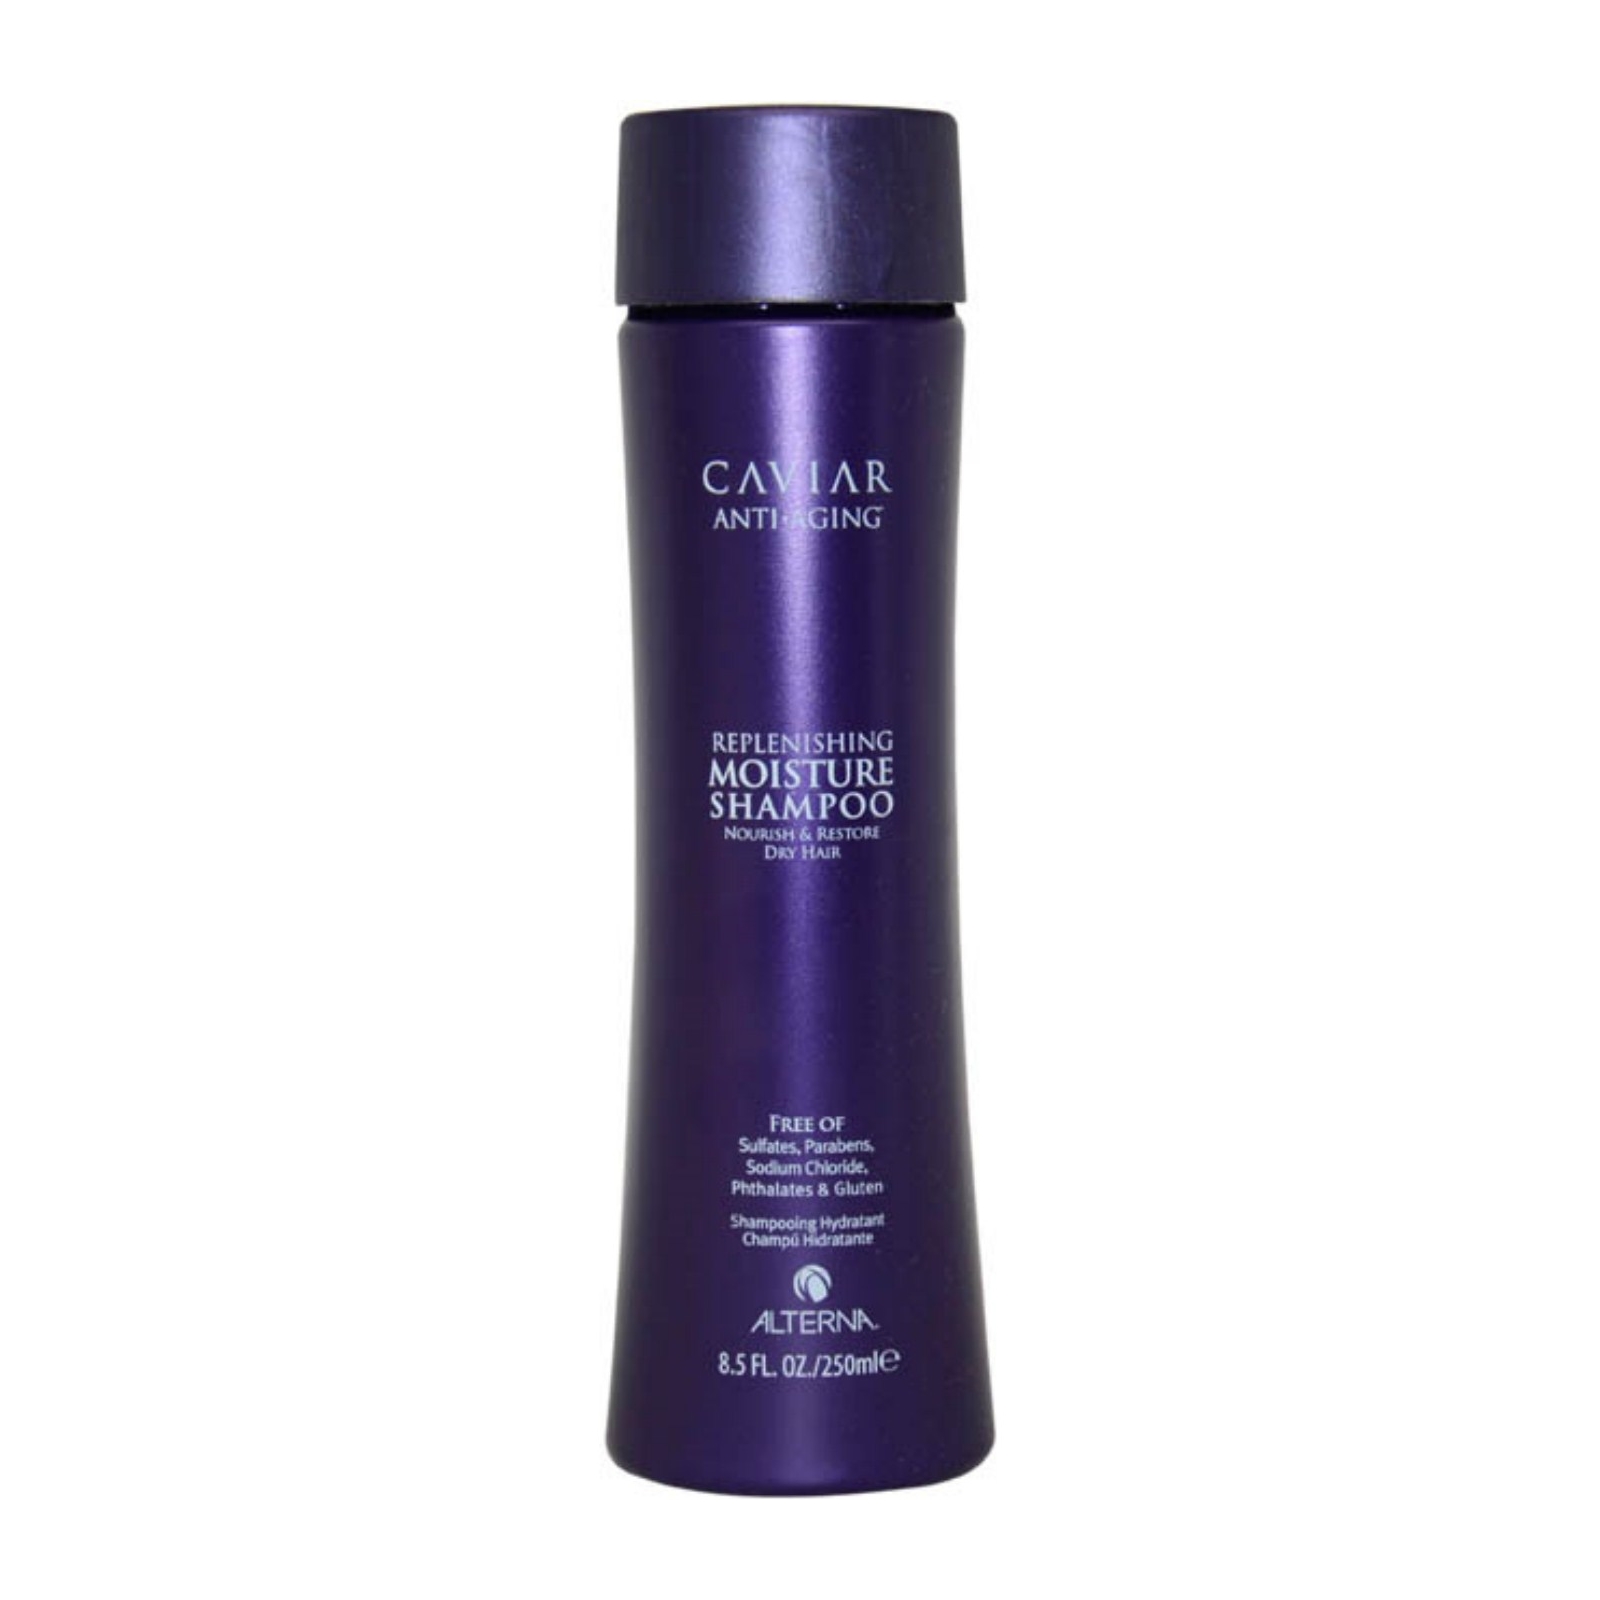 Alterna Caviar Anti Aging Replenishing Moisture Shampoo by  for Unisex - 8.5 oz Shampoo